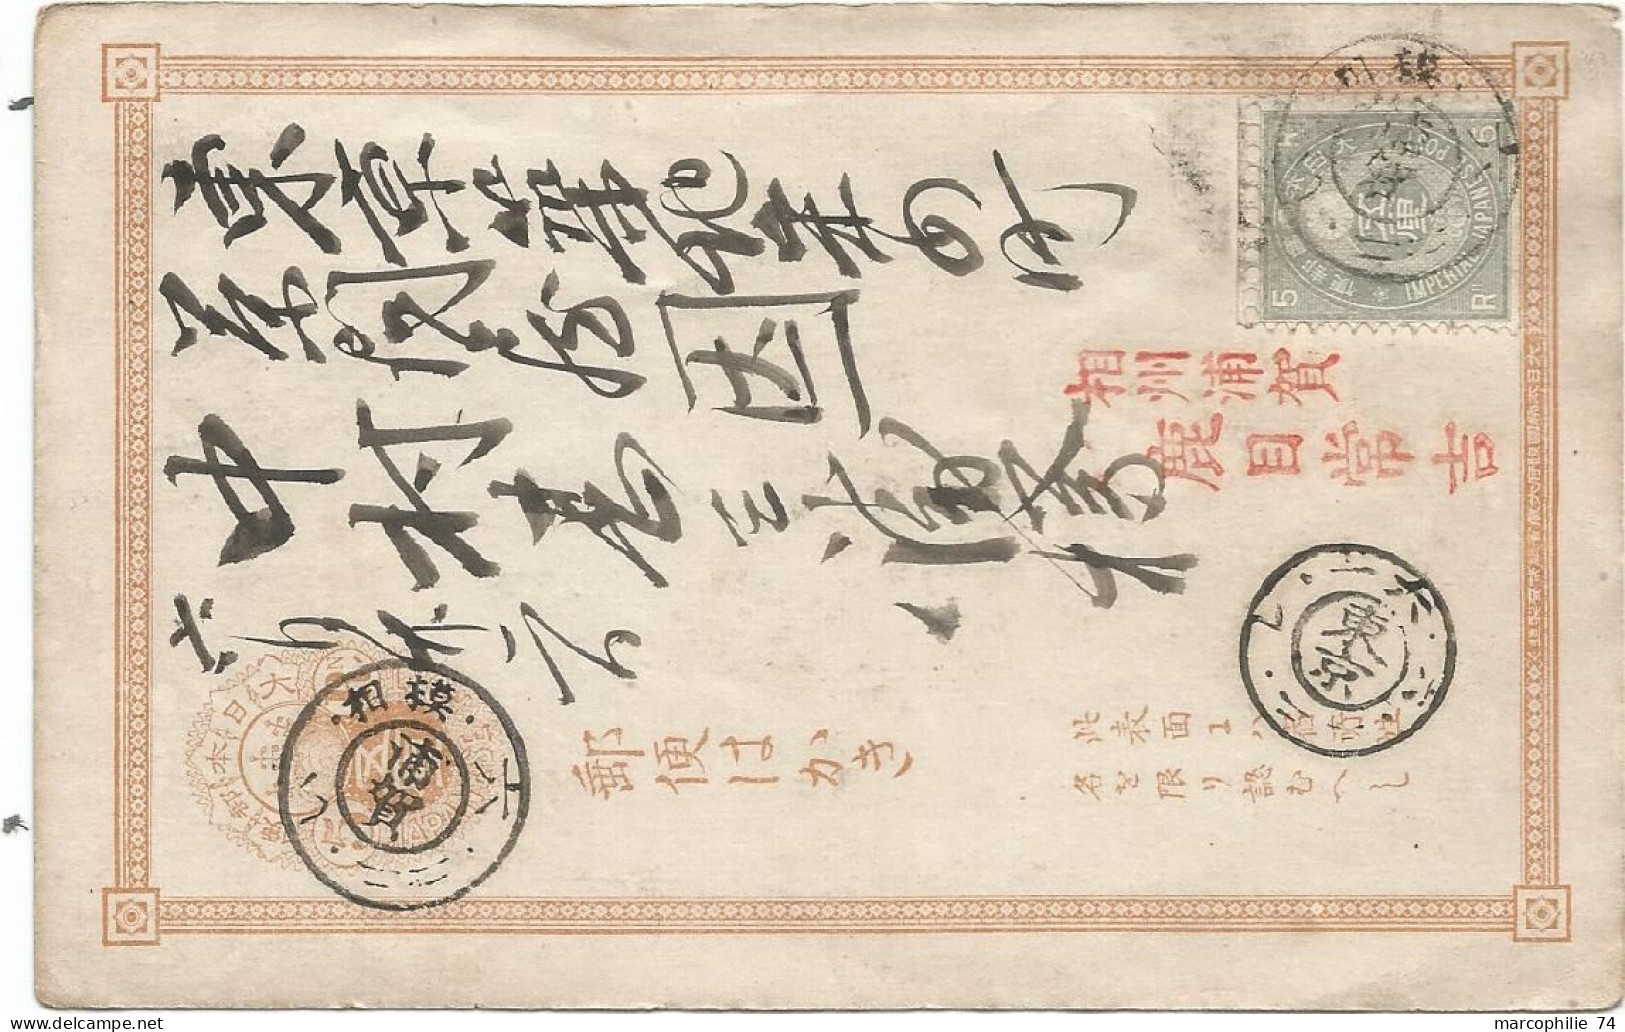 JAPAN ENTIER CARD + 5R IMPERIALE JAPANESE - Briefe U. Dokumente